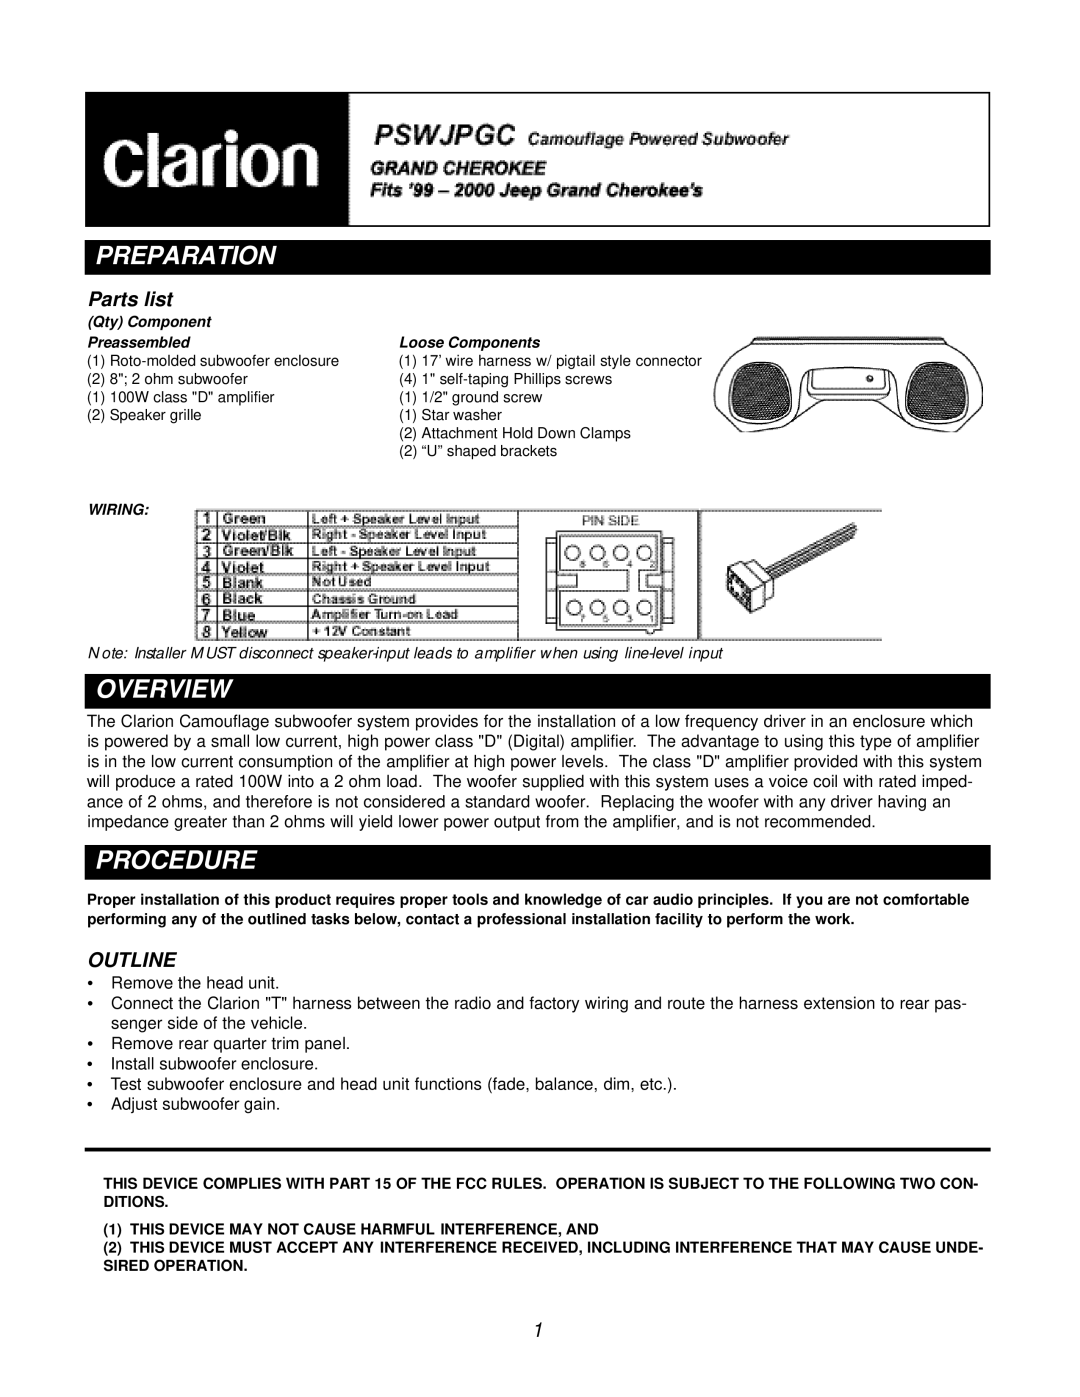 Clarion PSWJPGC manual Preparation, Overview, Procedure, Parts list, Outline 